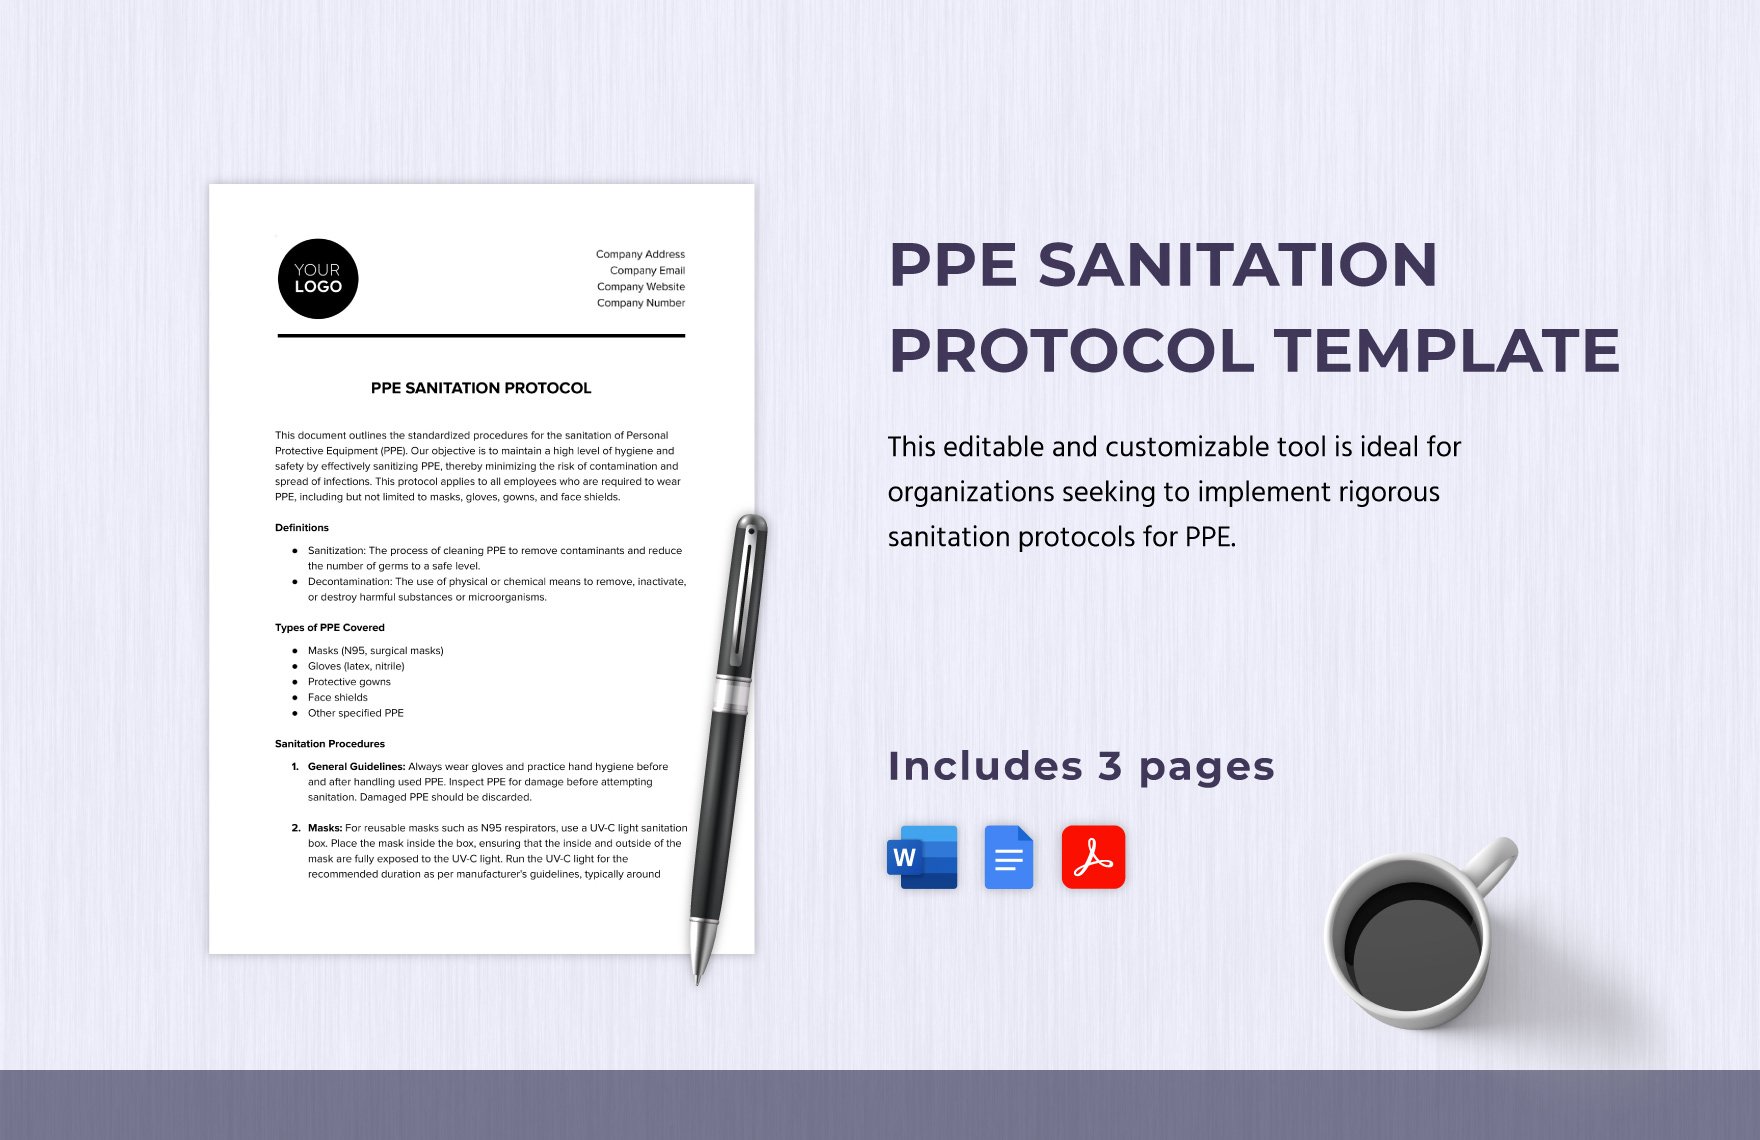 PPE Sanitation Protocol Template